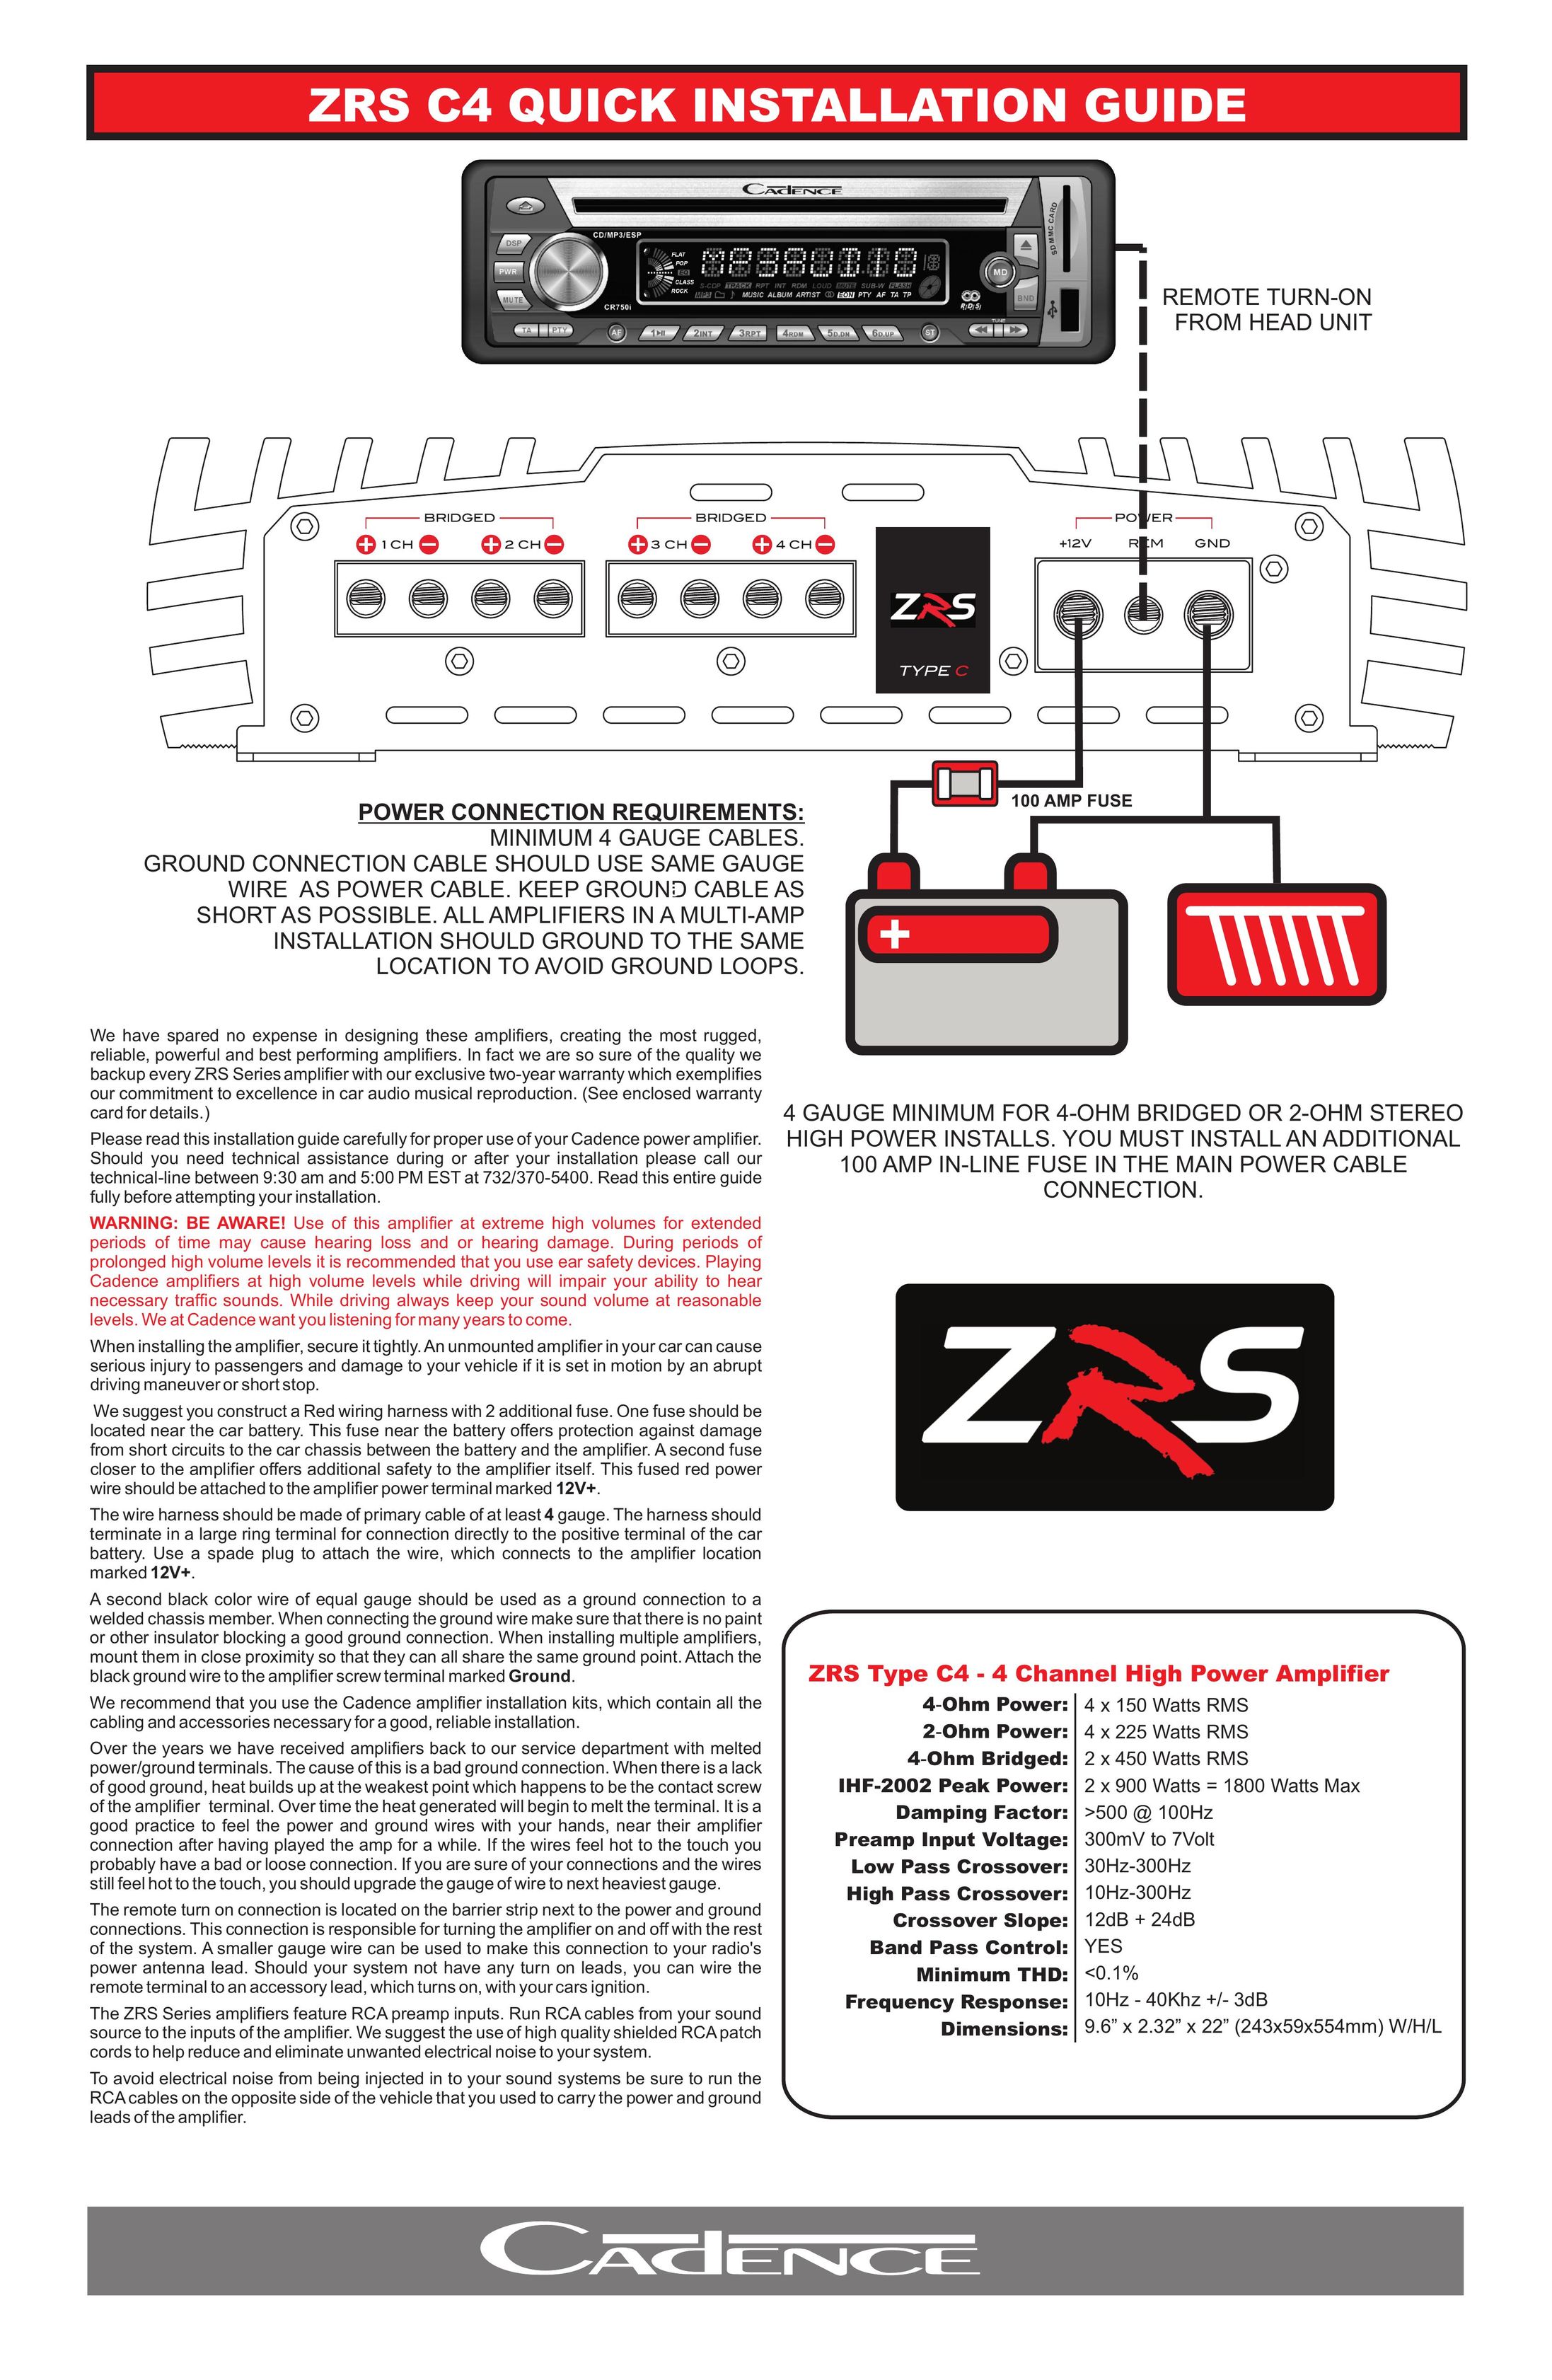 Cadence ZRS C4 Stereo Amplifier User Manual